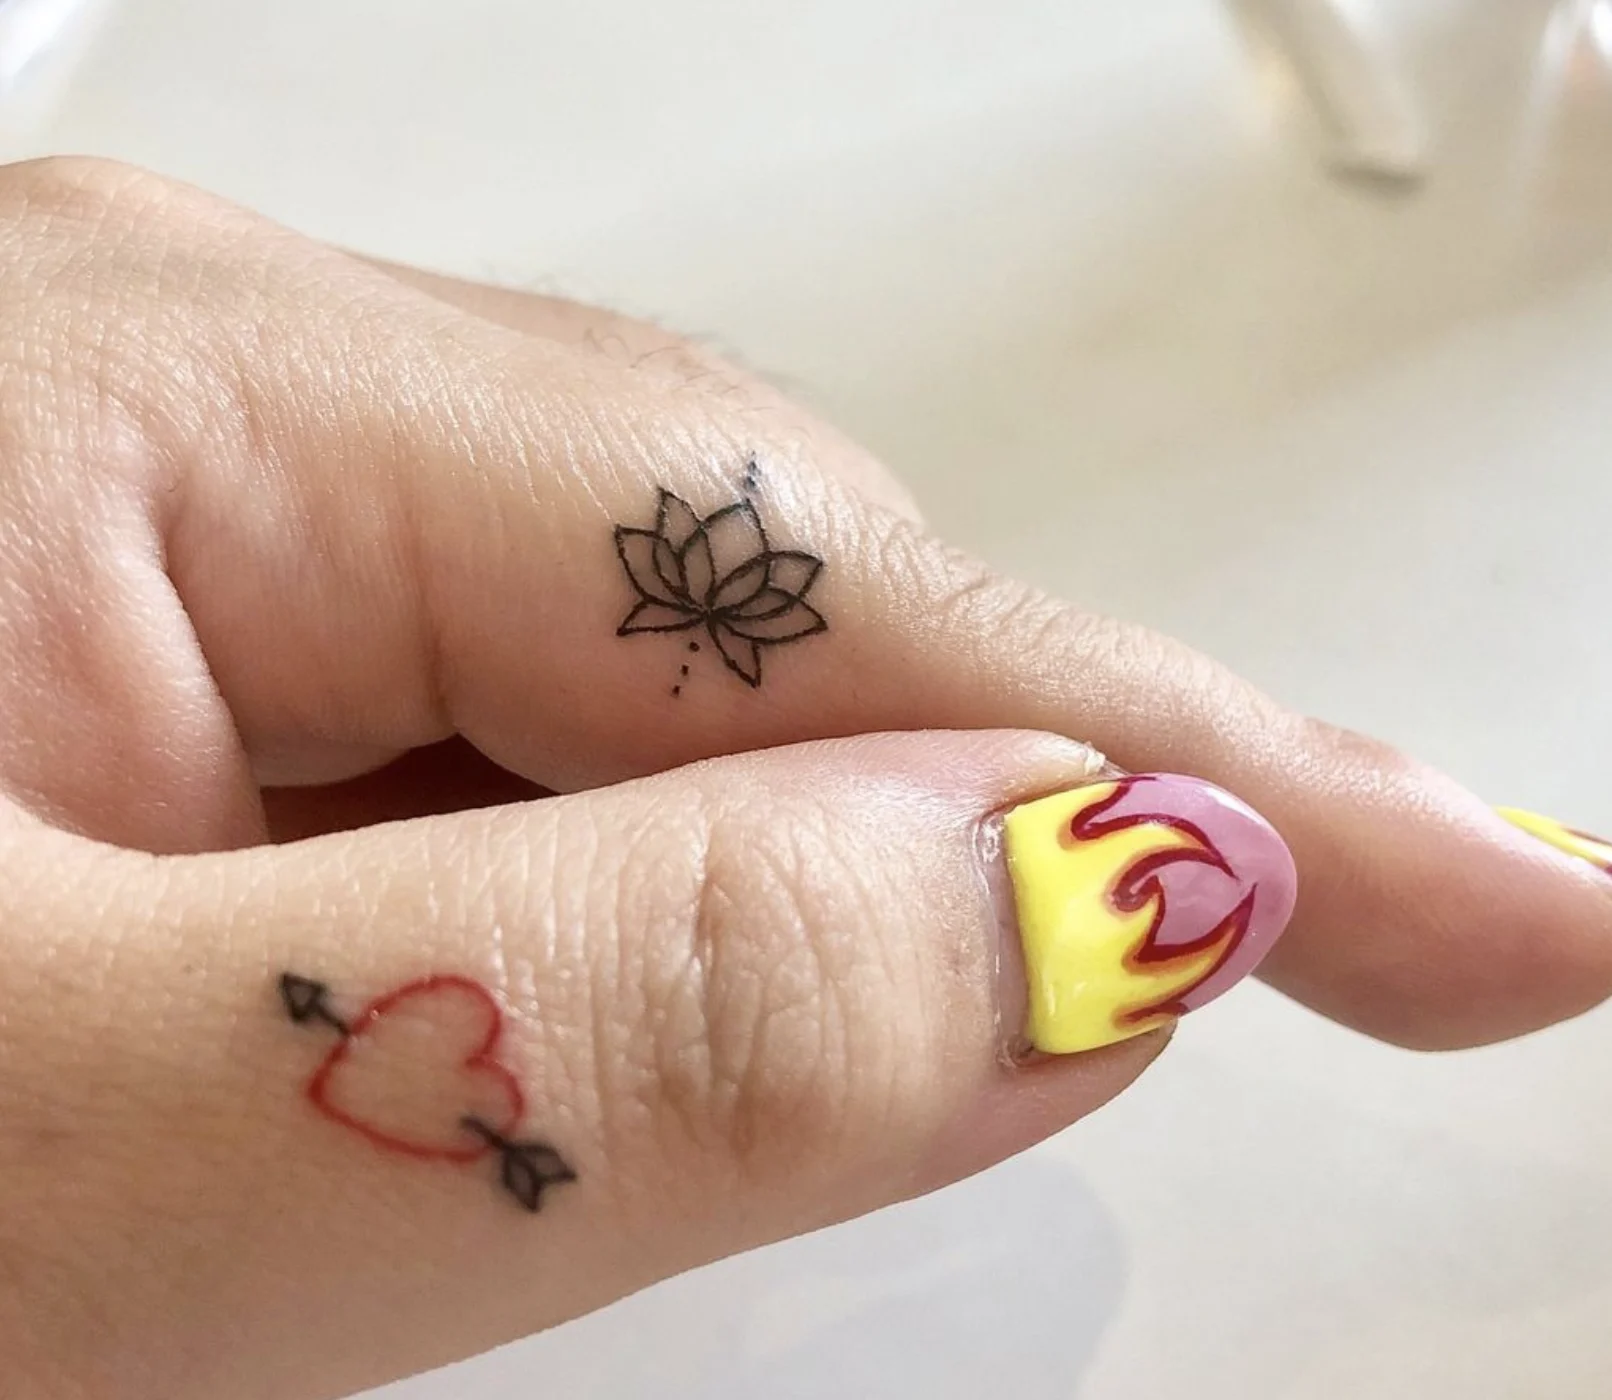 Lotus Flower Tattoo Ideas  Meaning  Tattoo Glee